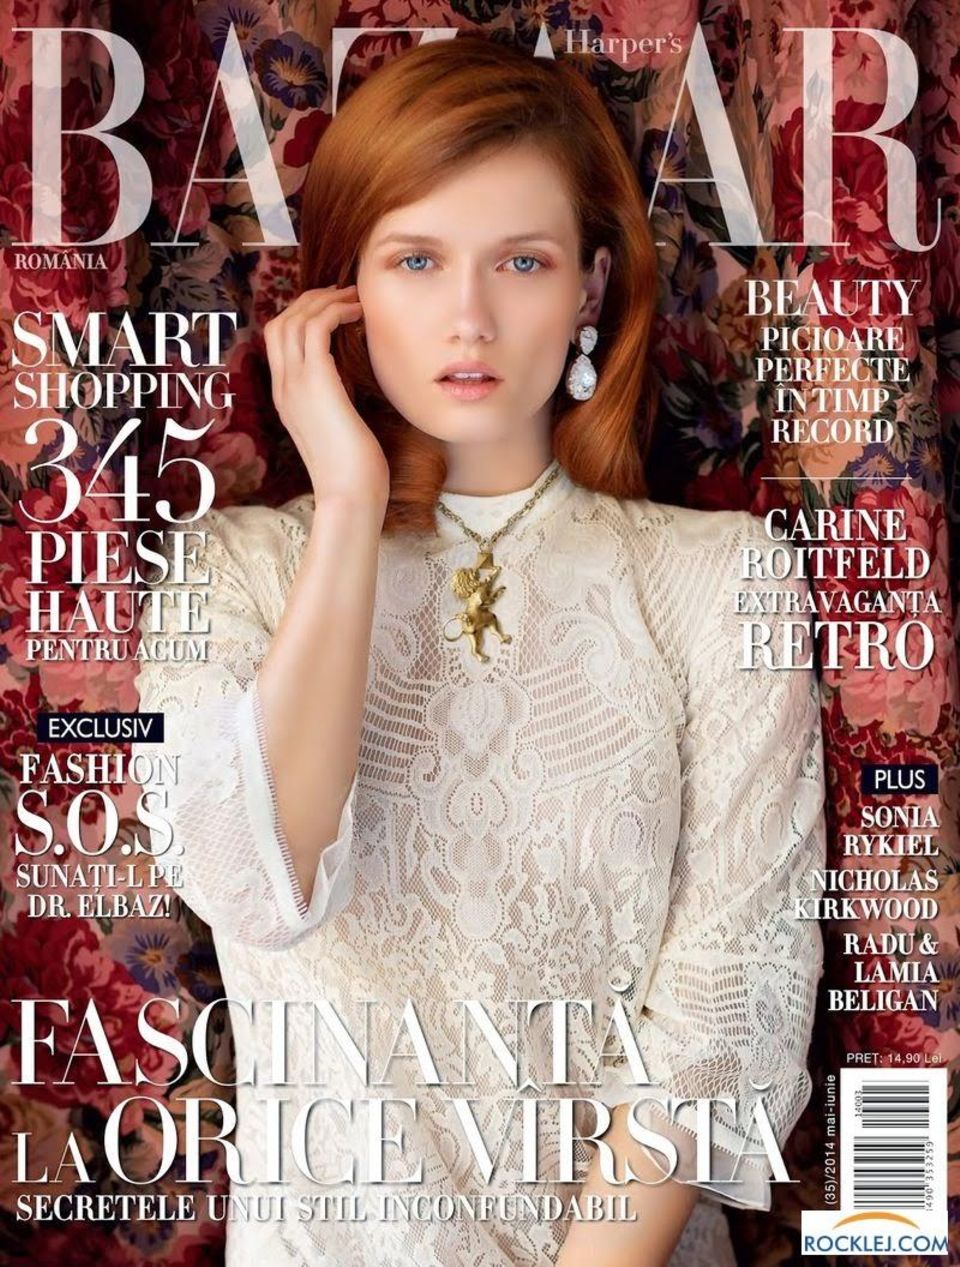 Katerina Netolicka auf dem Cover der "Harper's Bazaar"